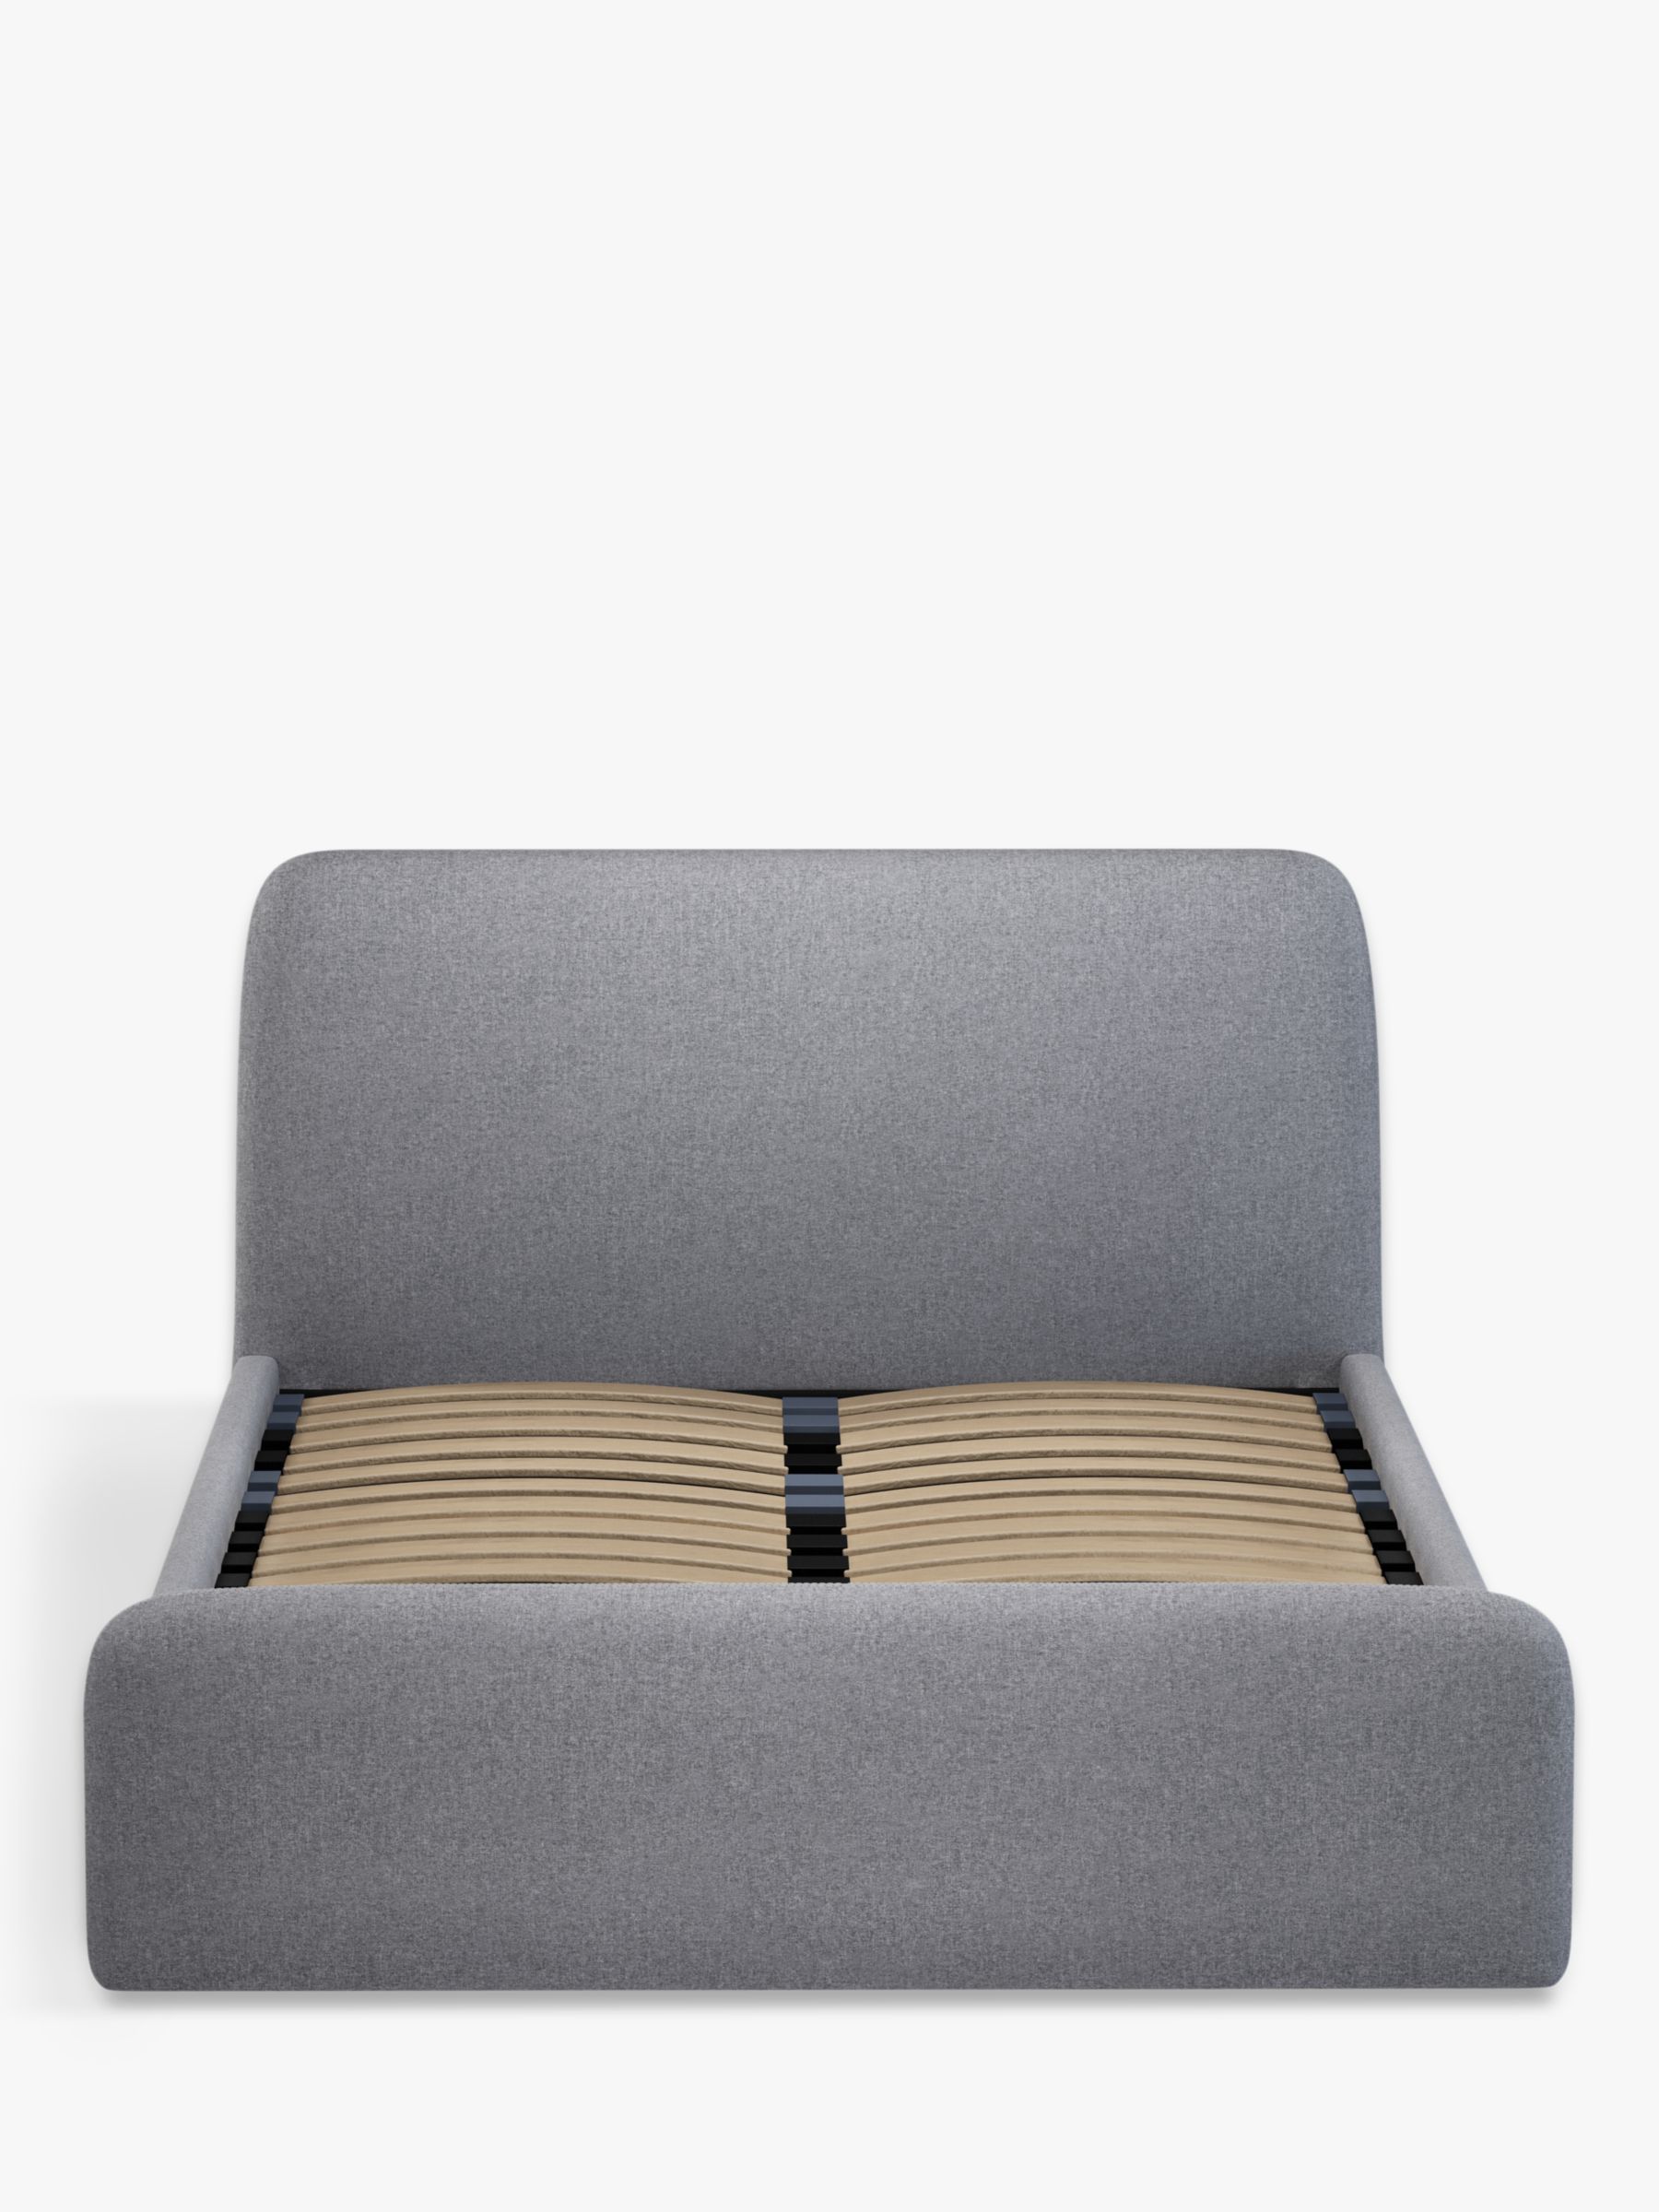 ANYDAY John Lewis & Partners Bonn Ottoman Storage Upholstered Bed Frame ...